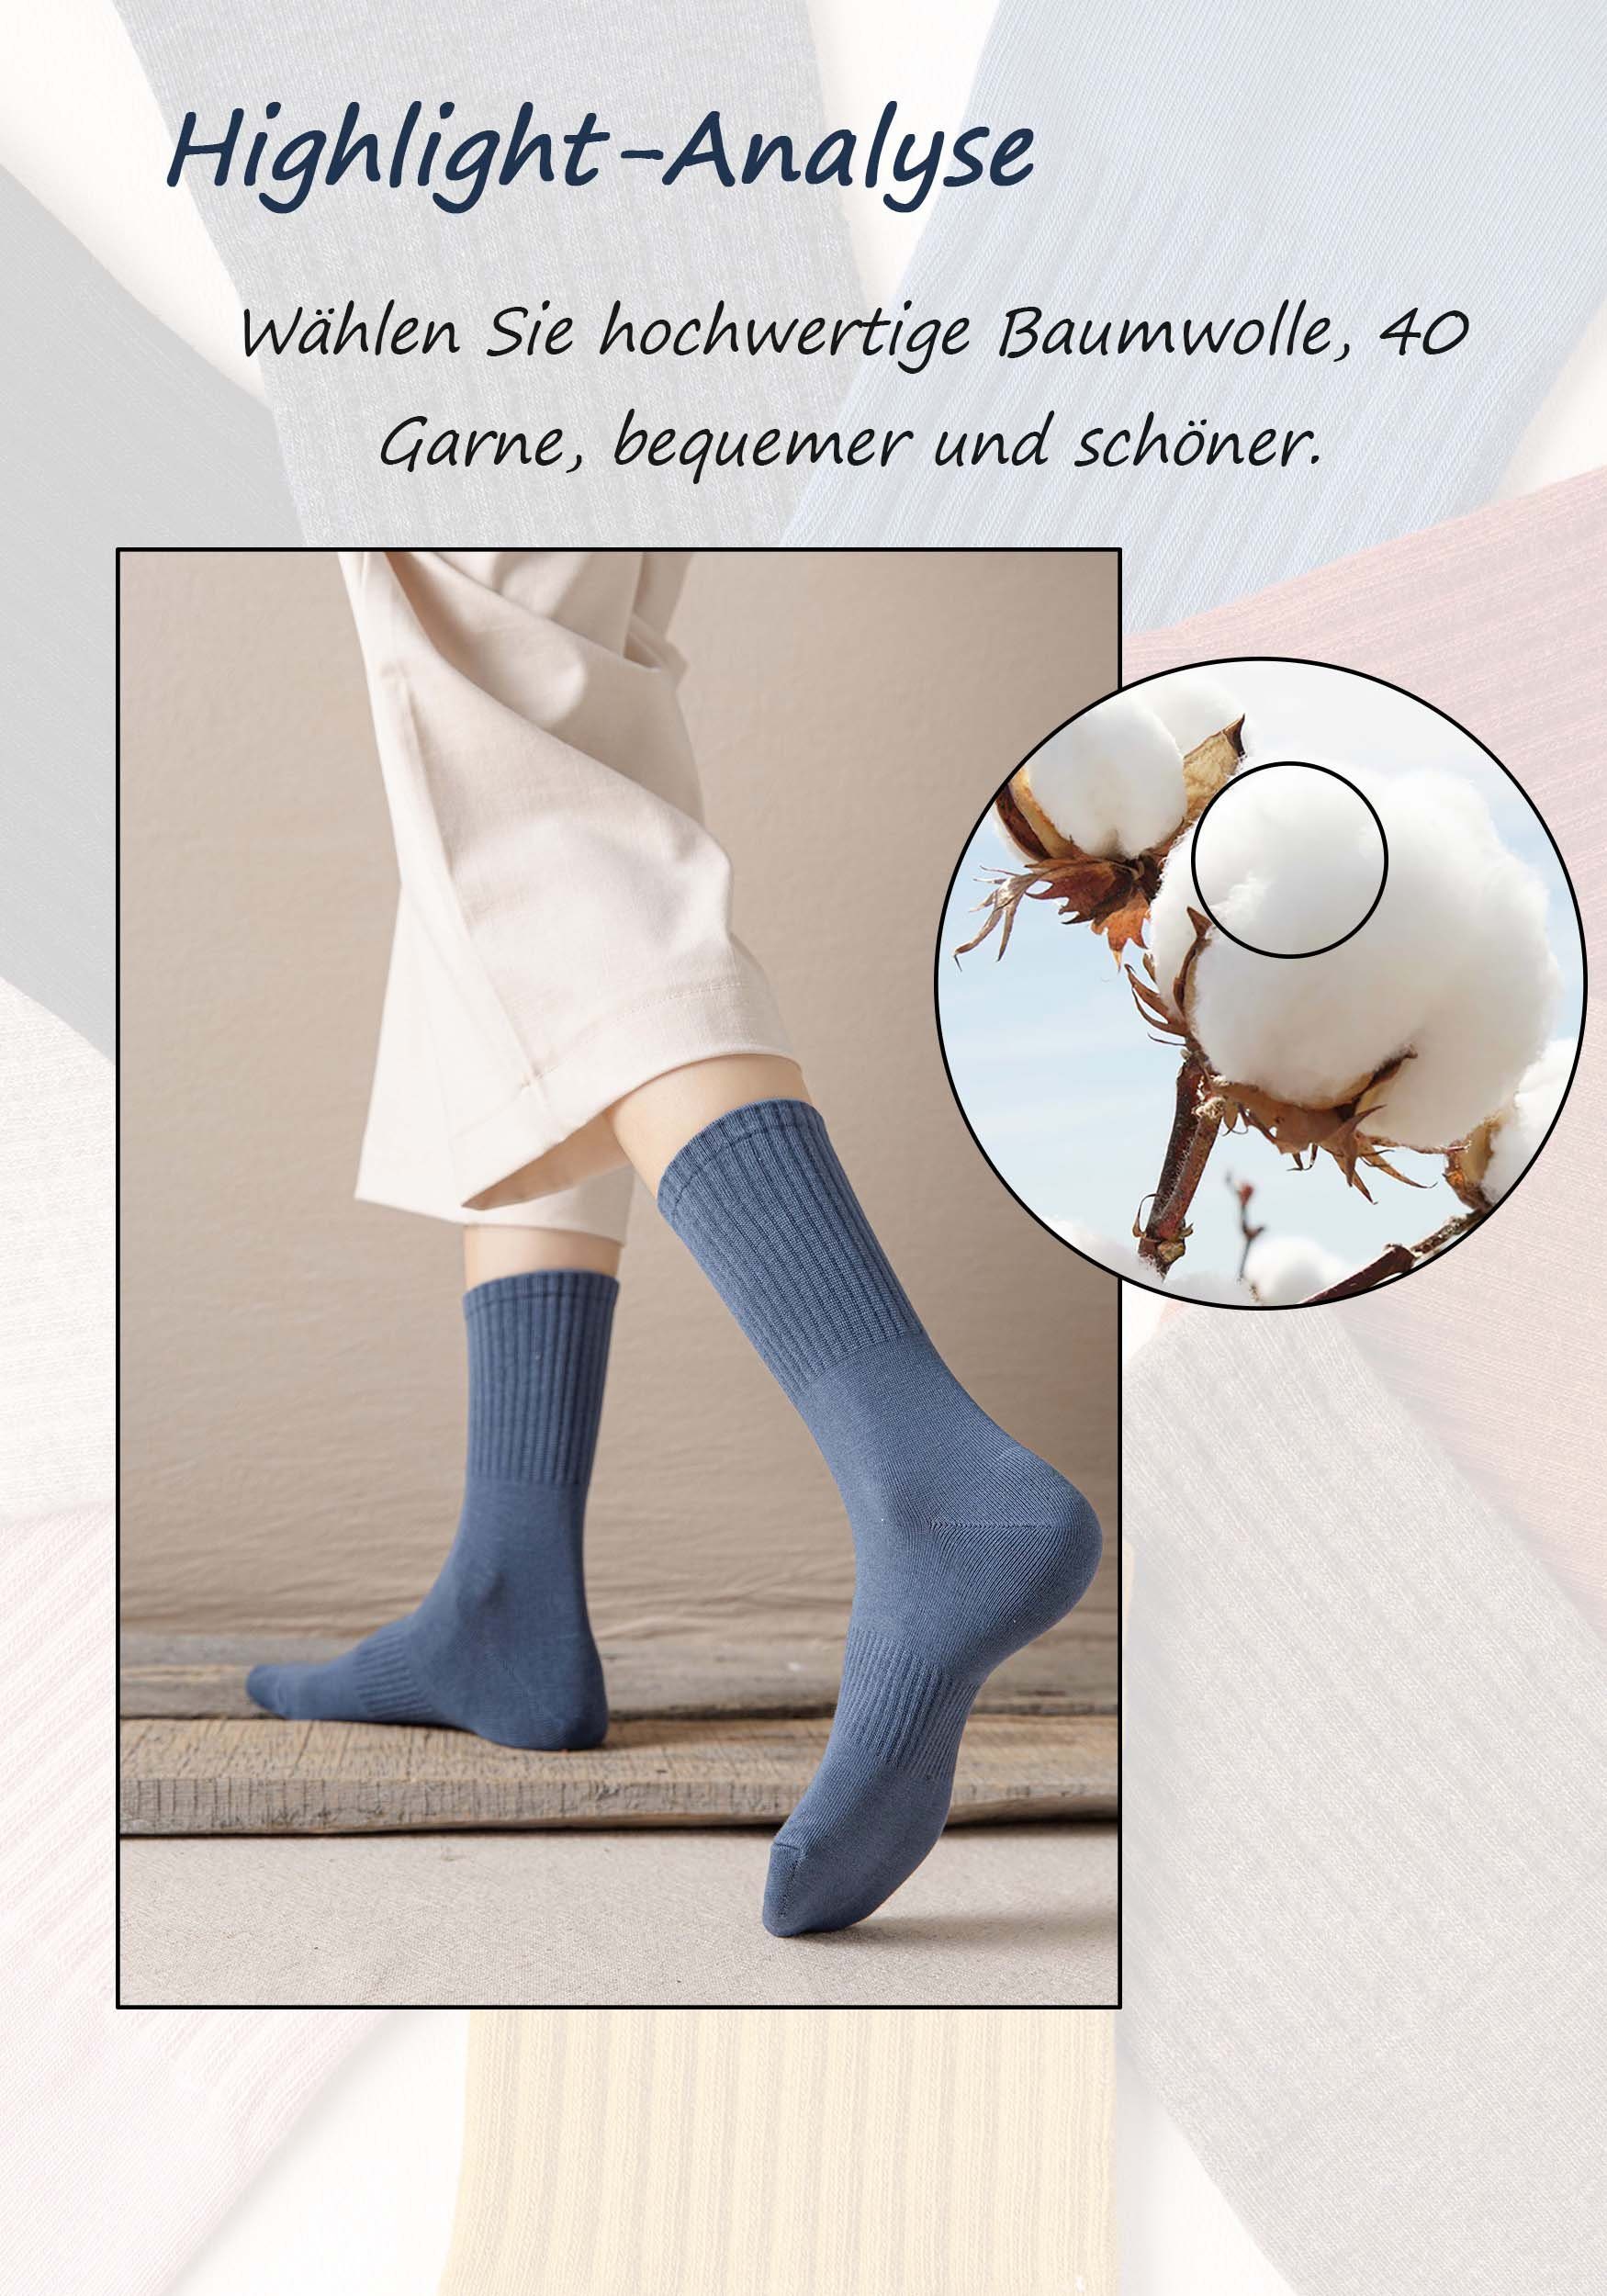 MAGICSHE Socken Damen einfarbig 100% Basicsocken Baumwolle hohes (4-Paar, 4-Paar) Blau